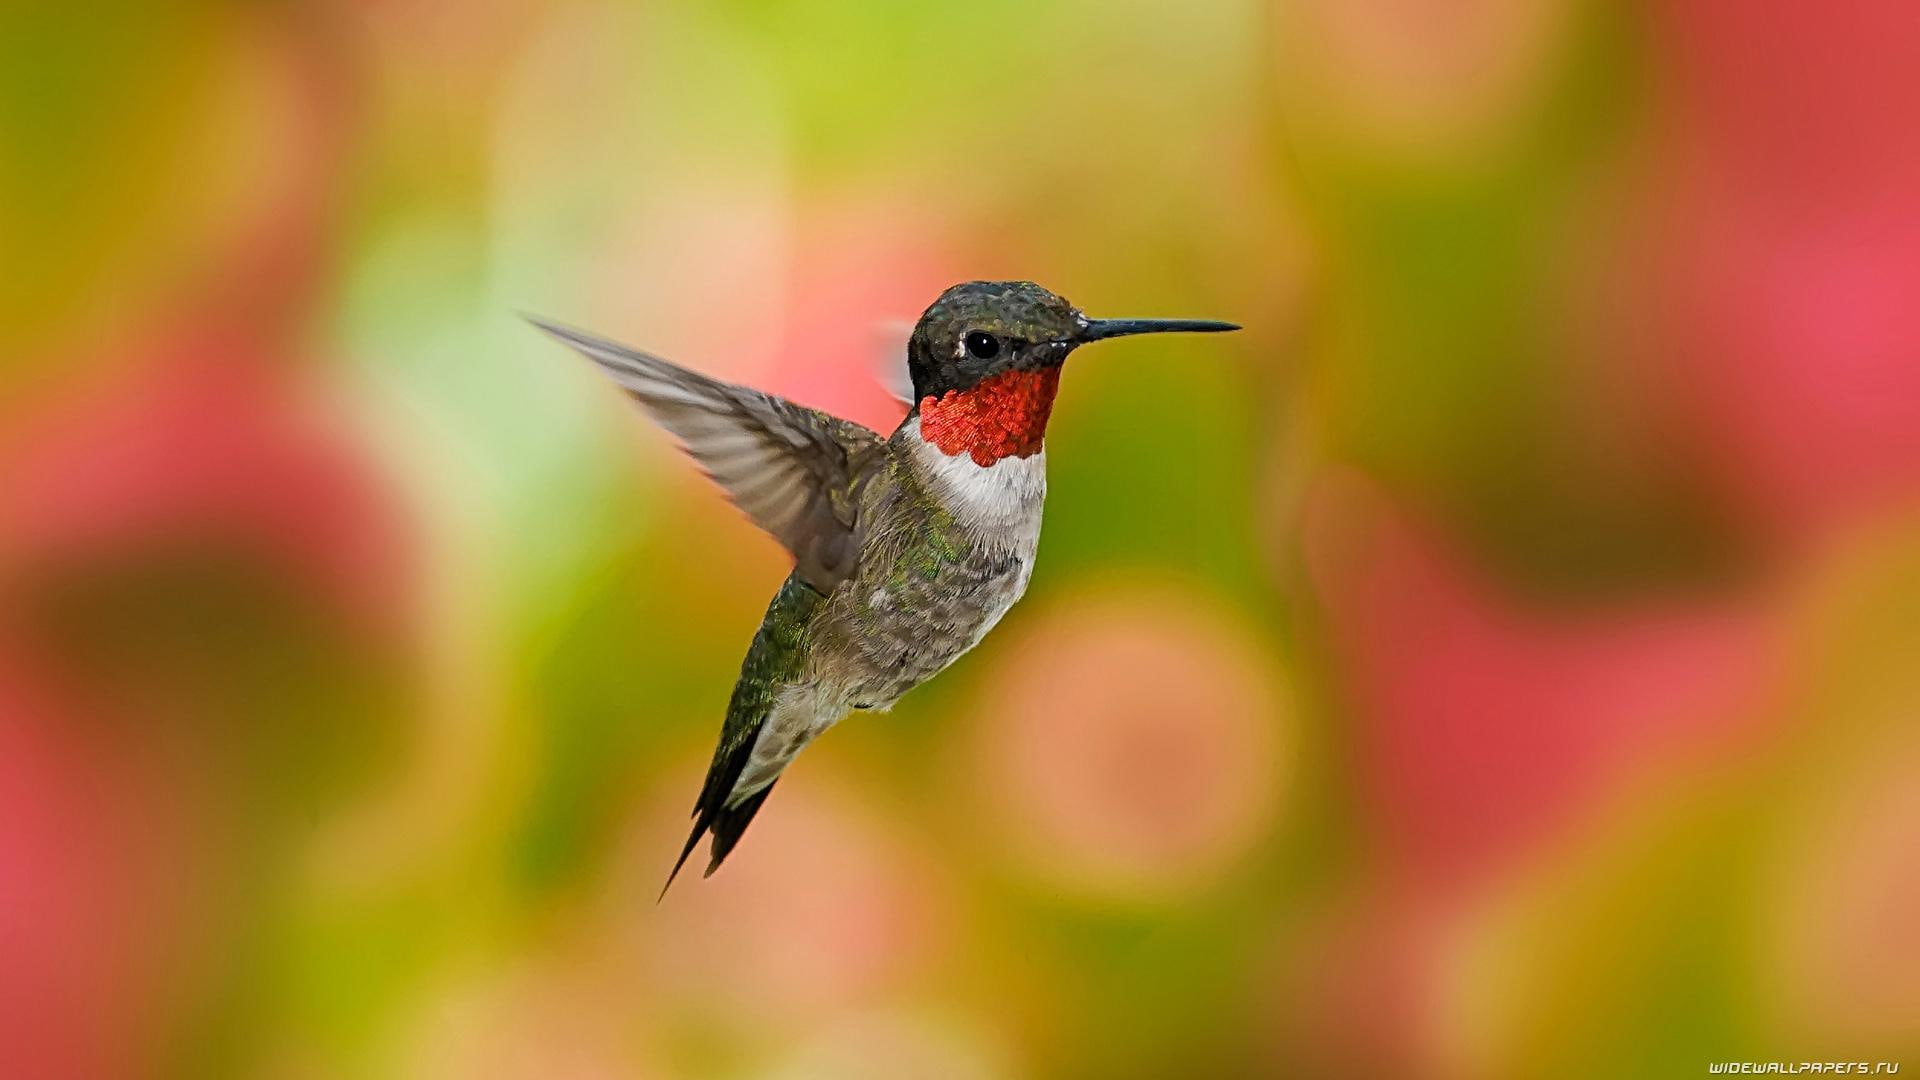 A Hummingbird, red-brown-and-black humming bird, backward, flying